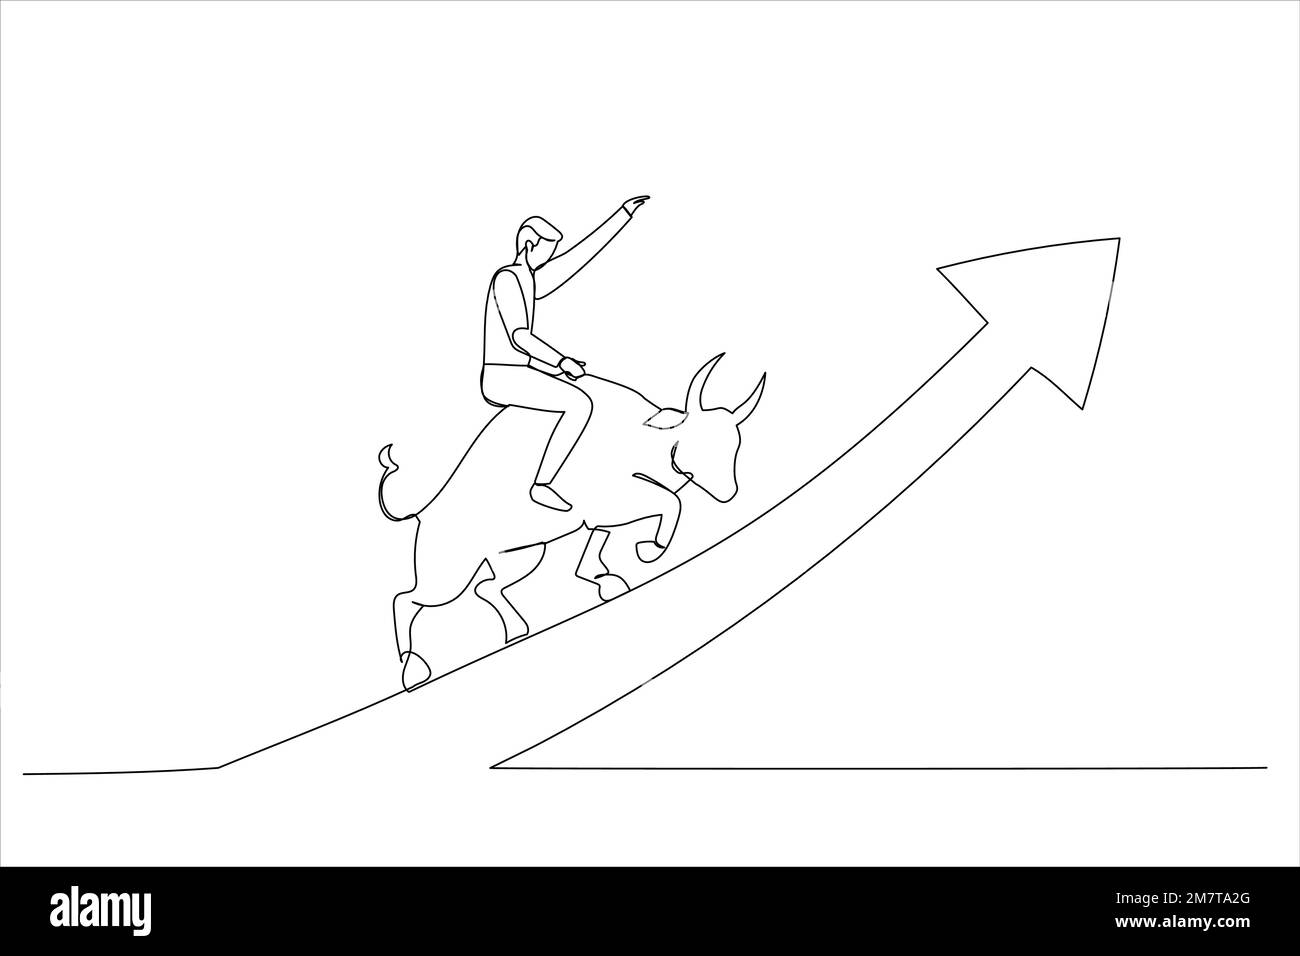 Cartoon of confident businessman investor riding bull running on rising up upward green graph. Stock market bull market. Single continuous line art st Stock Vector